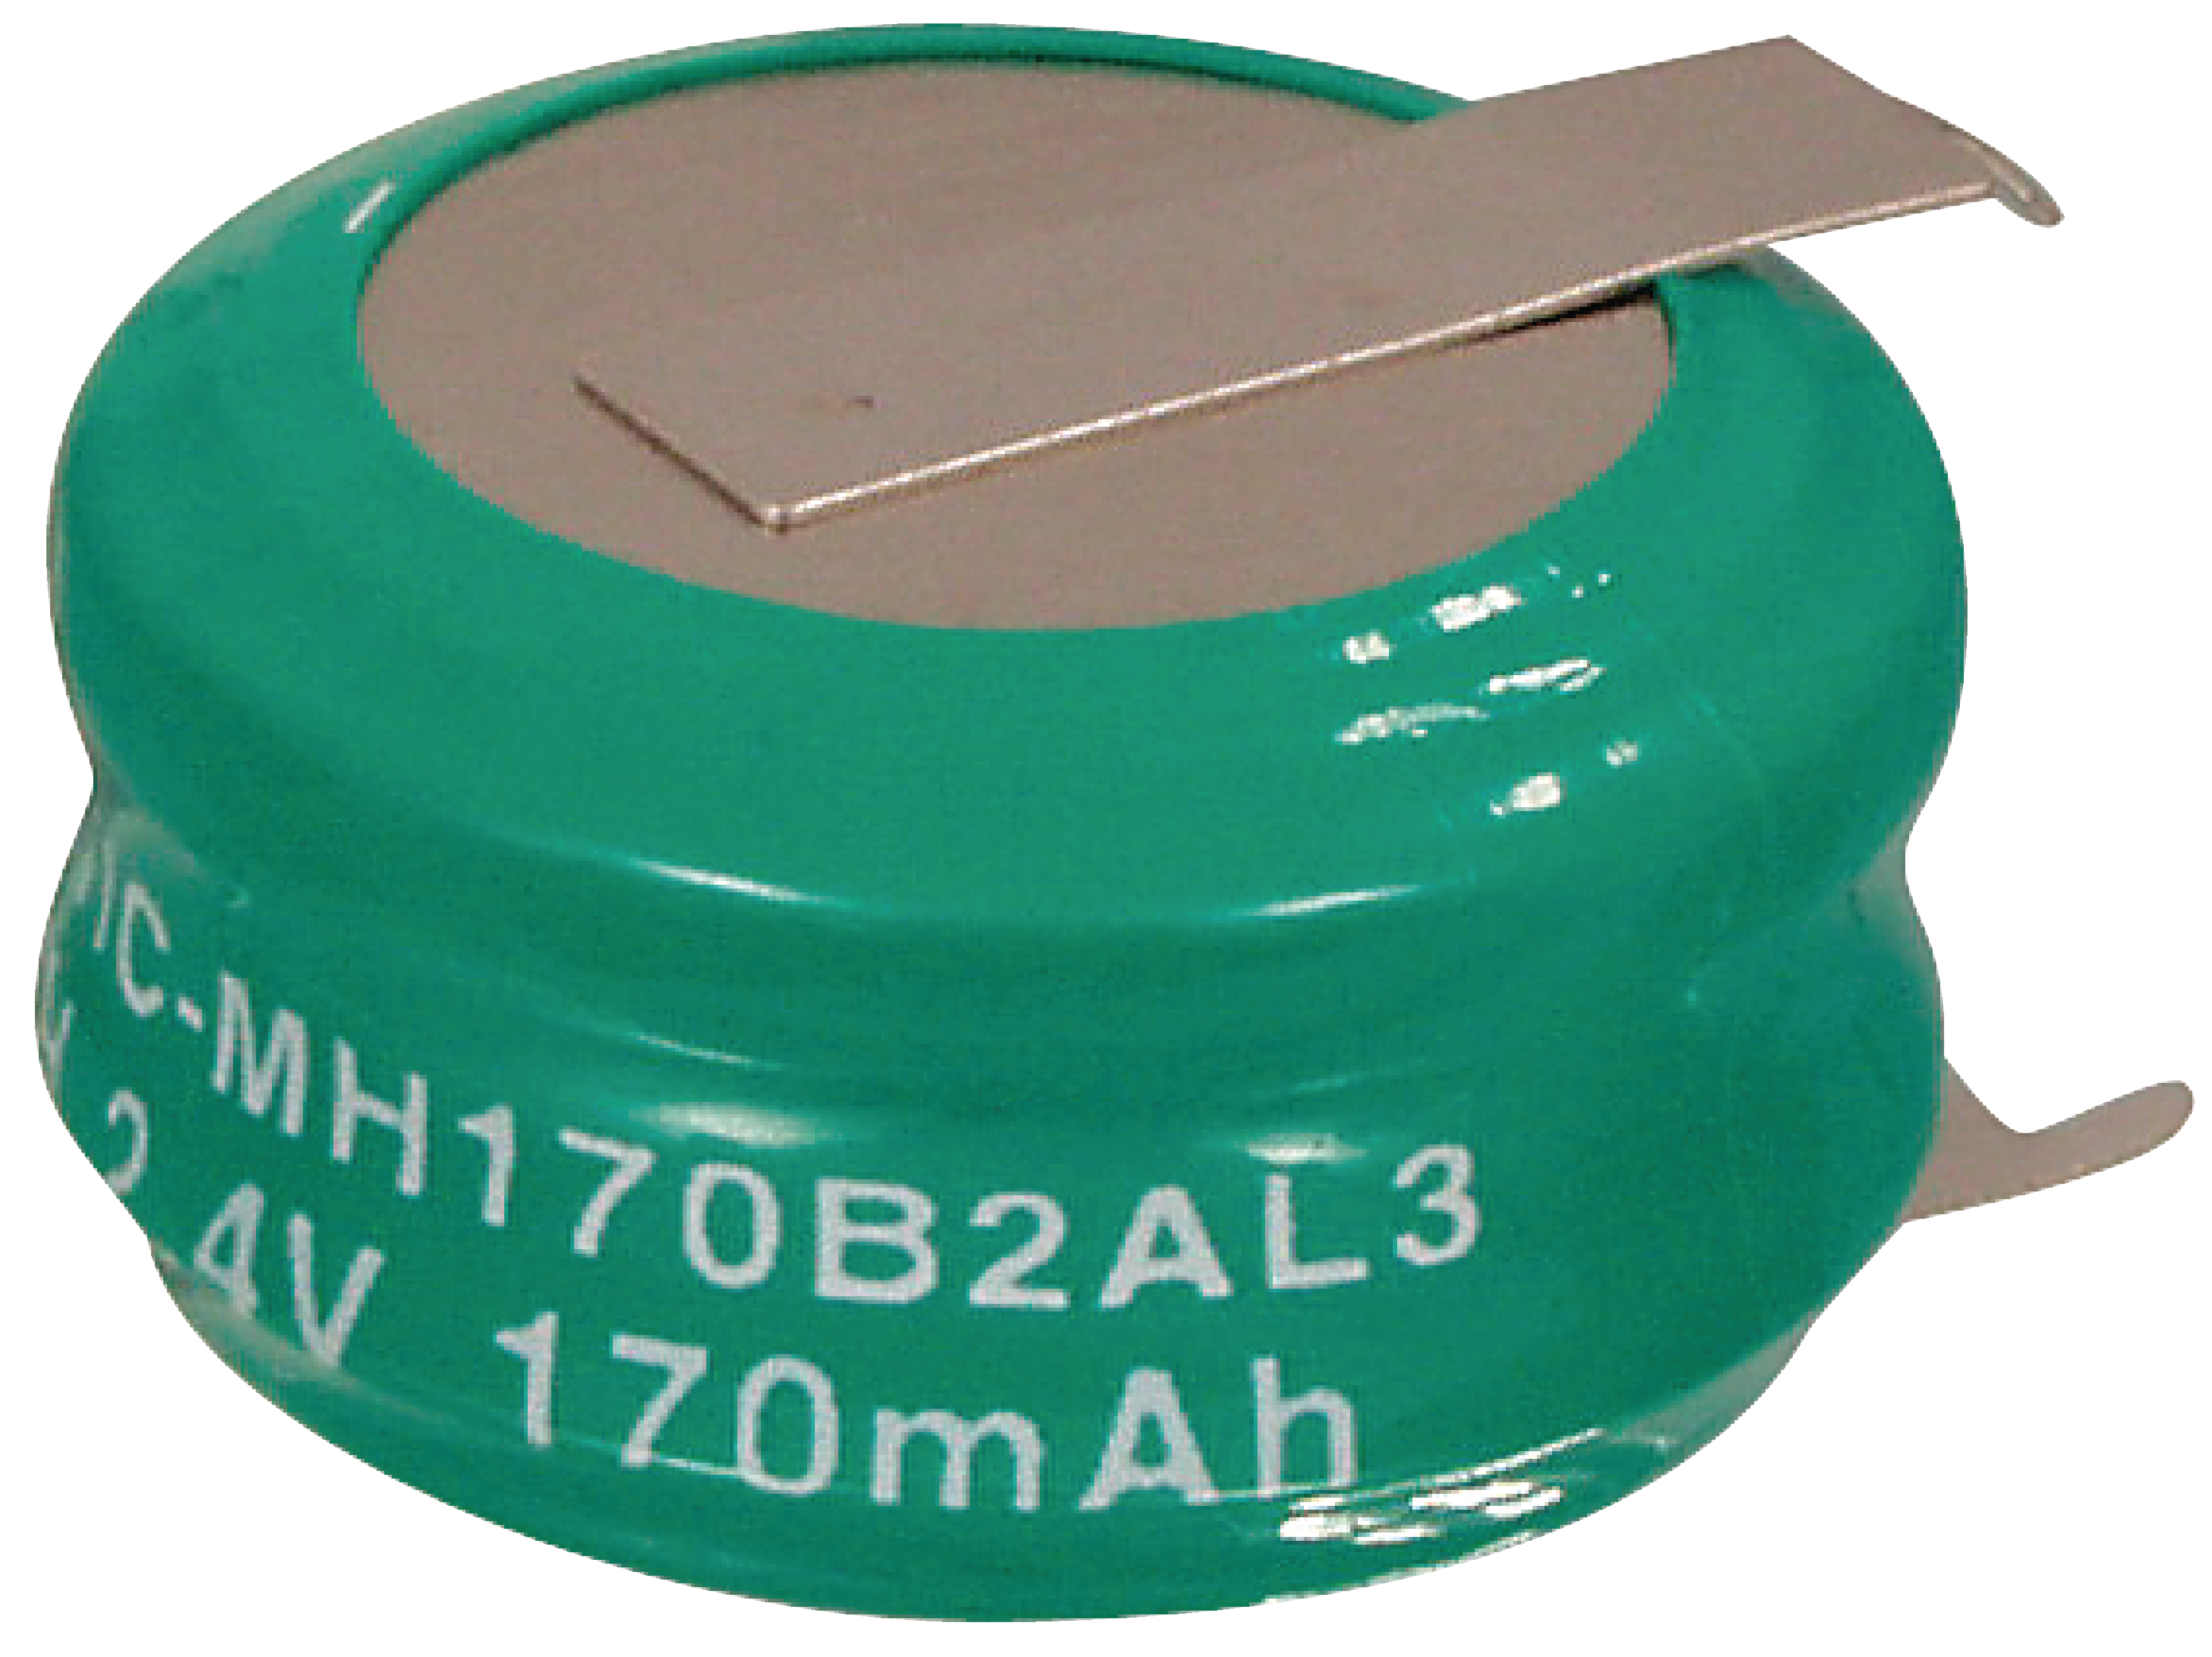 Accu bouton ni-mh 2.4v 250ma (26 x 13.5mm) à souder